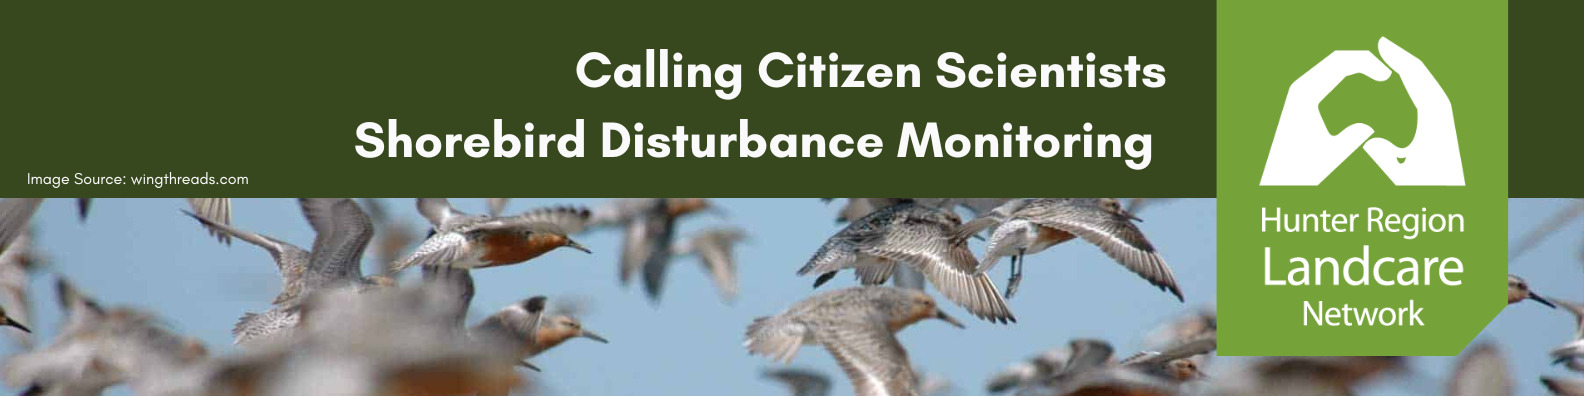 Calling Citizen Scientists (2)